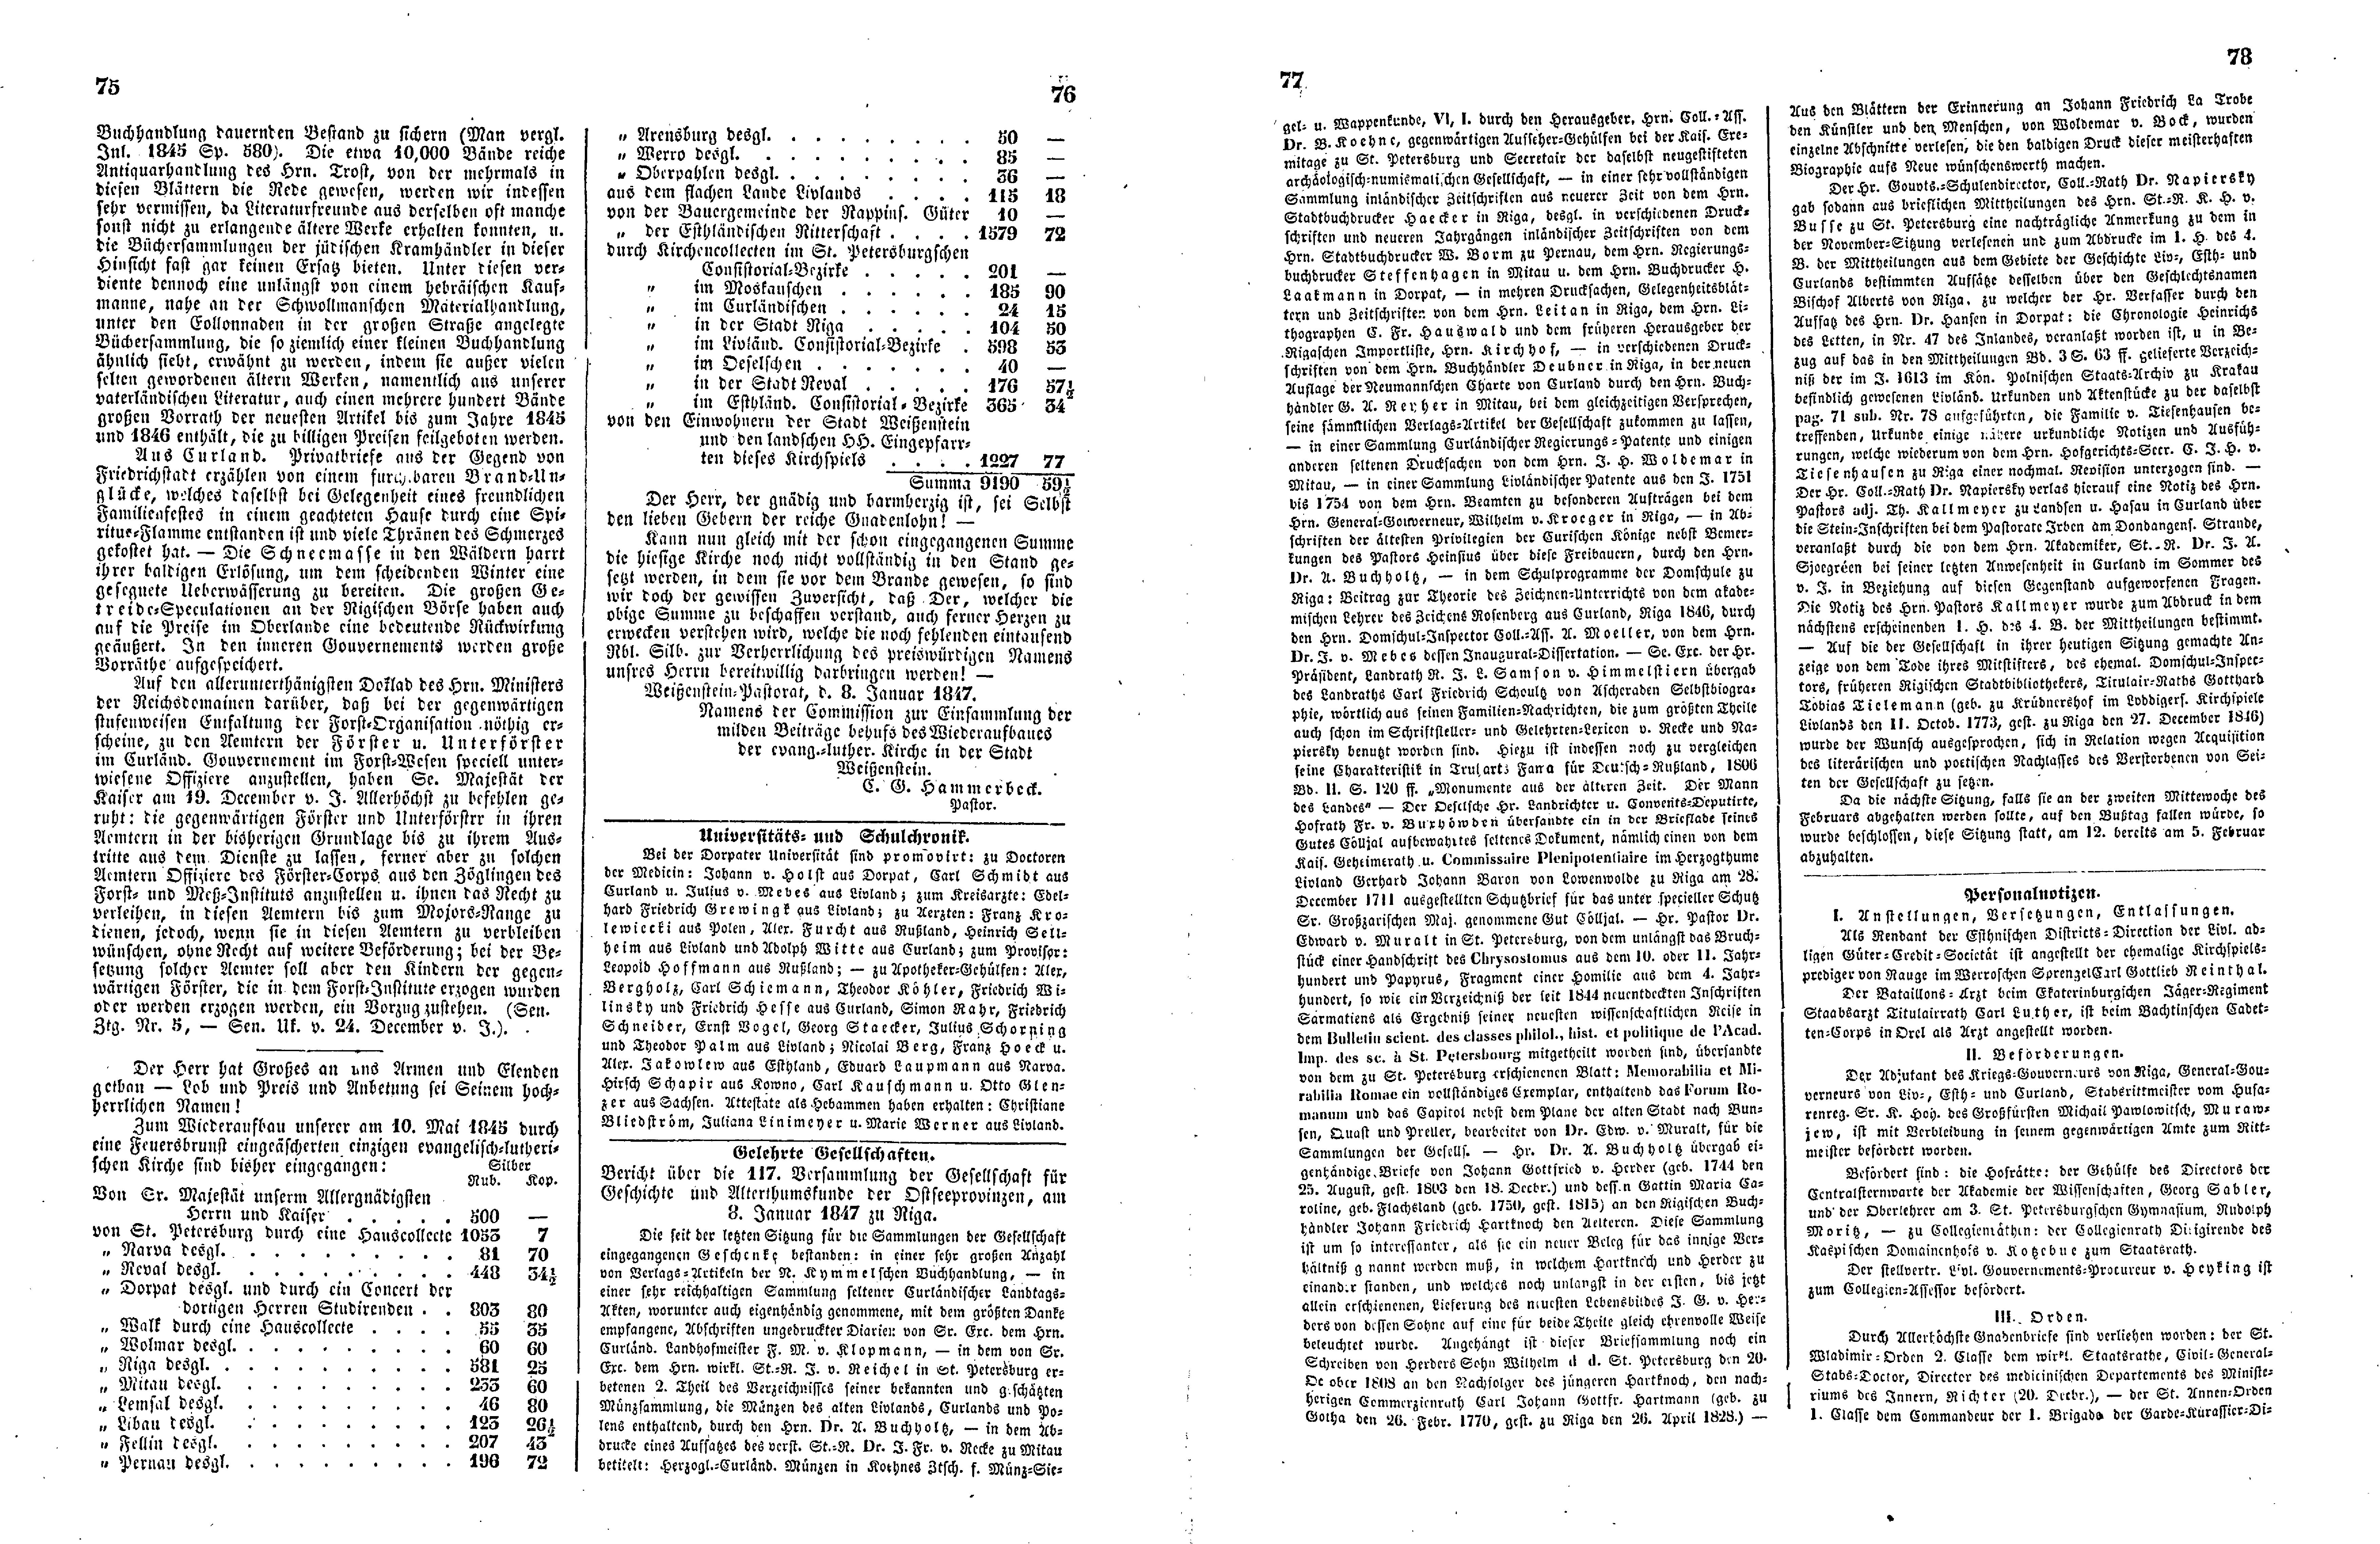 Das Inland [12] (1847) | 24. (75-78) Main body of text